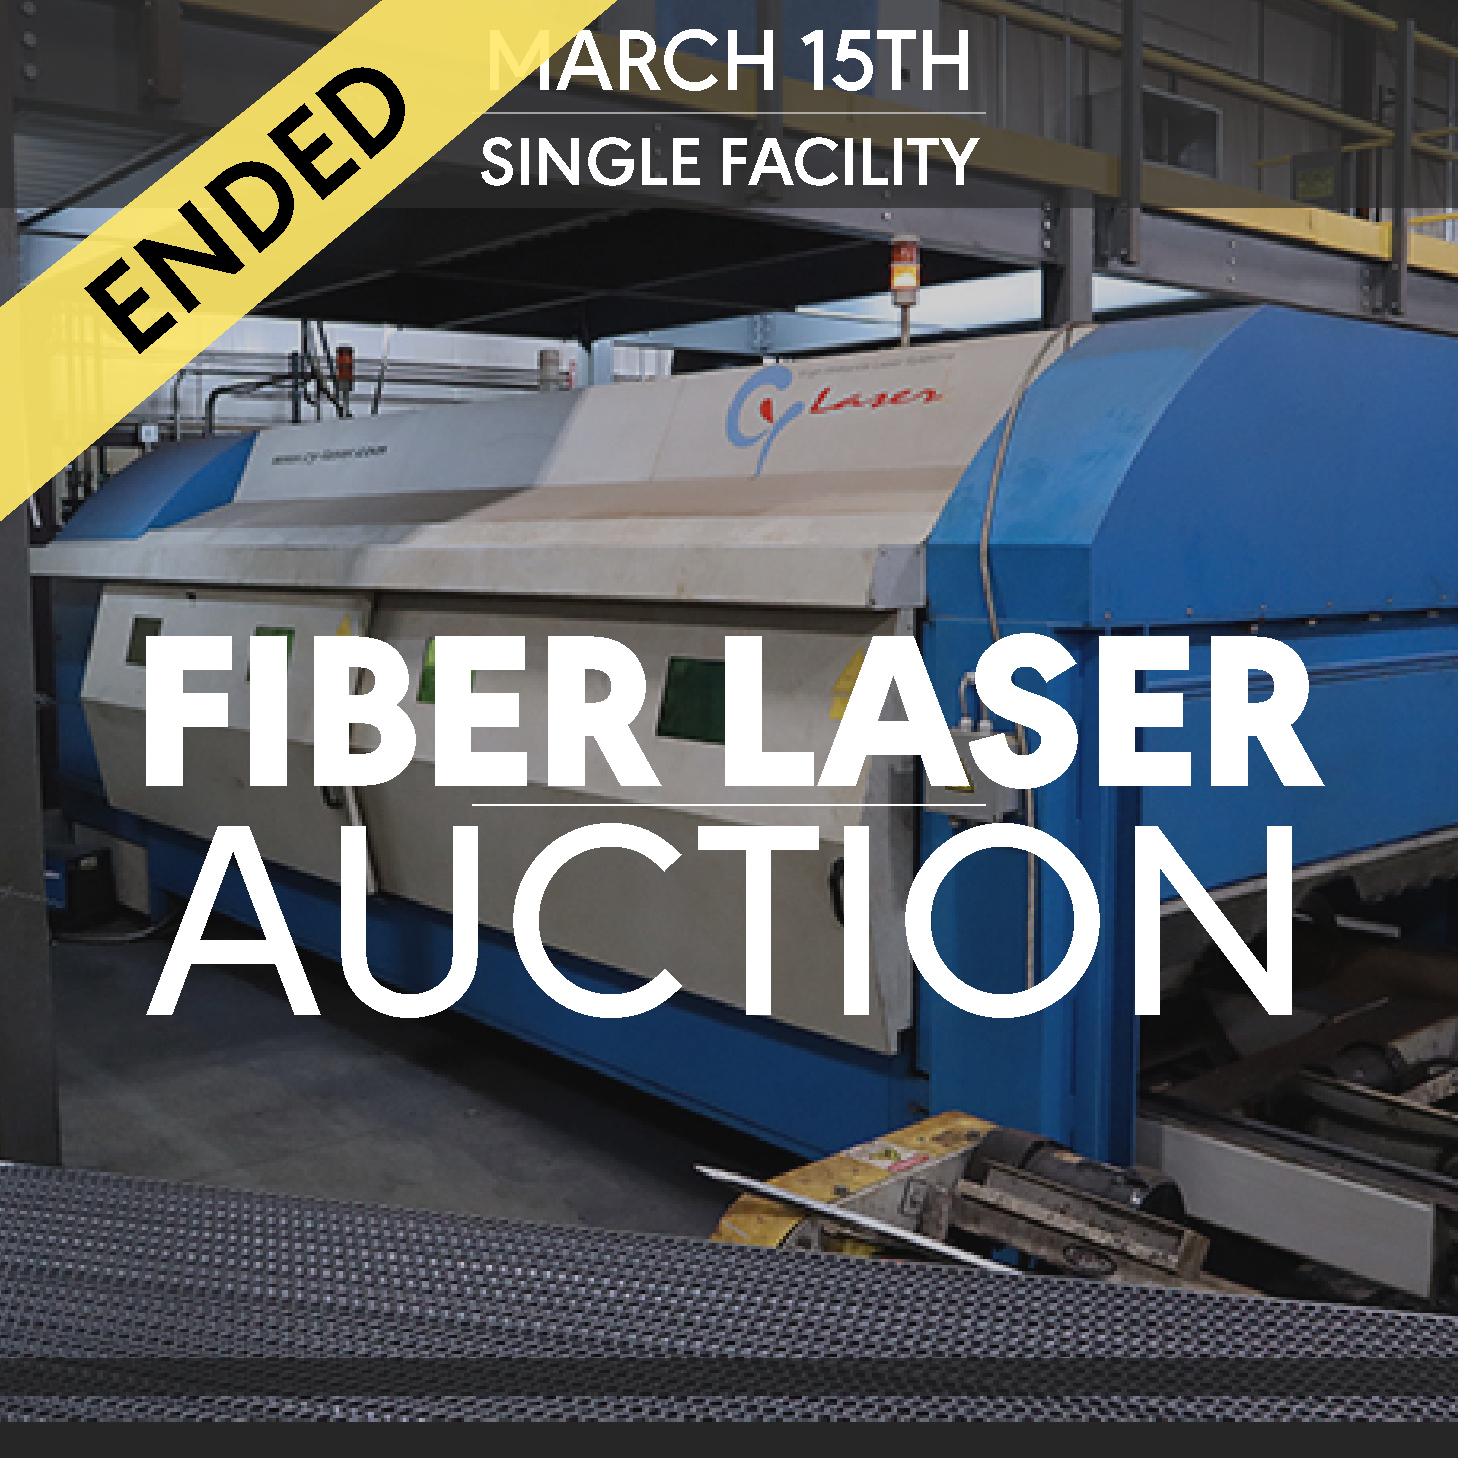 Laser Auction | March 15